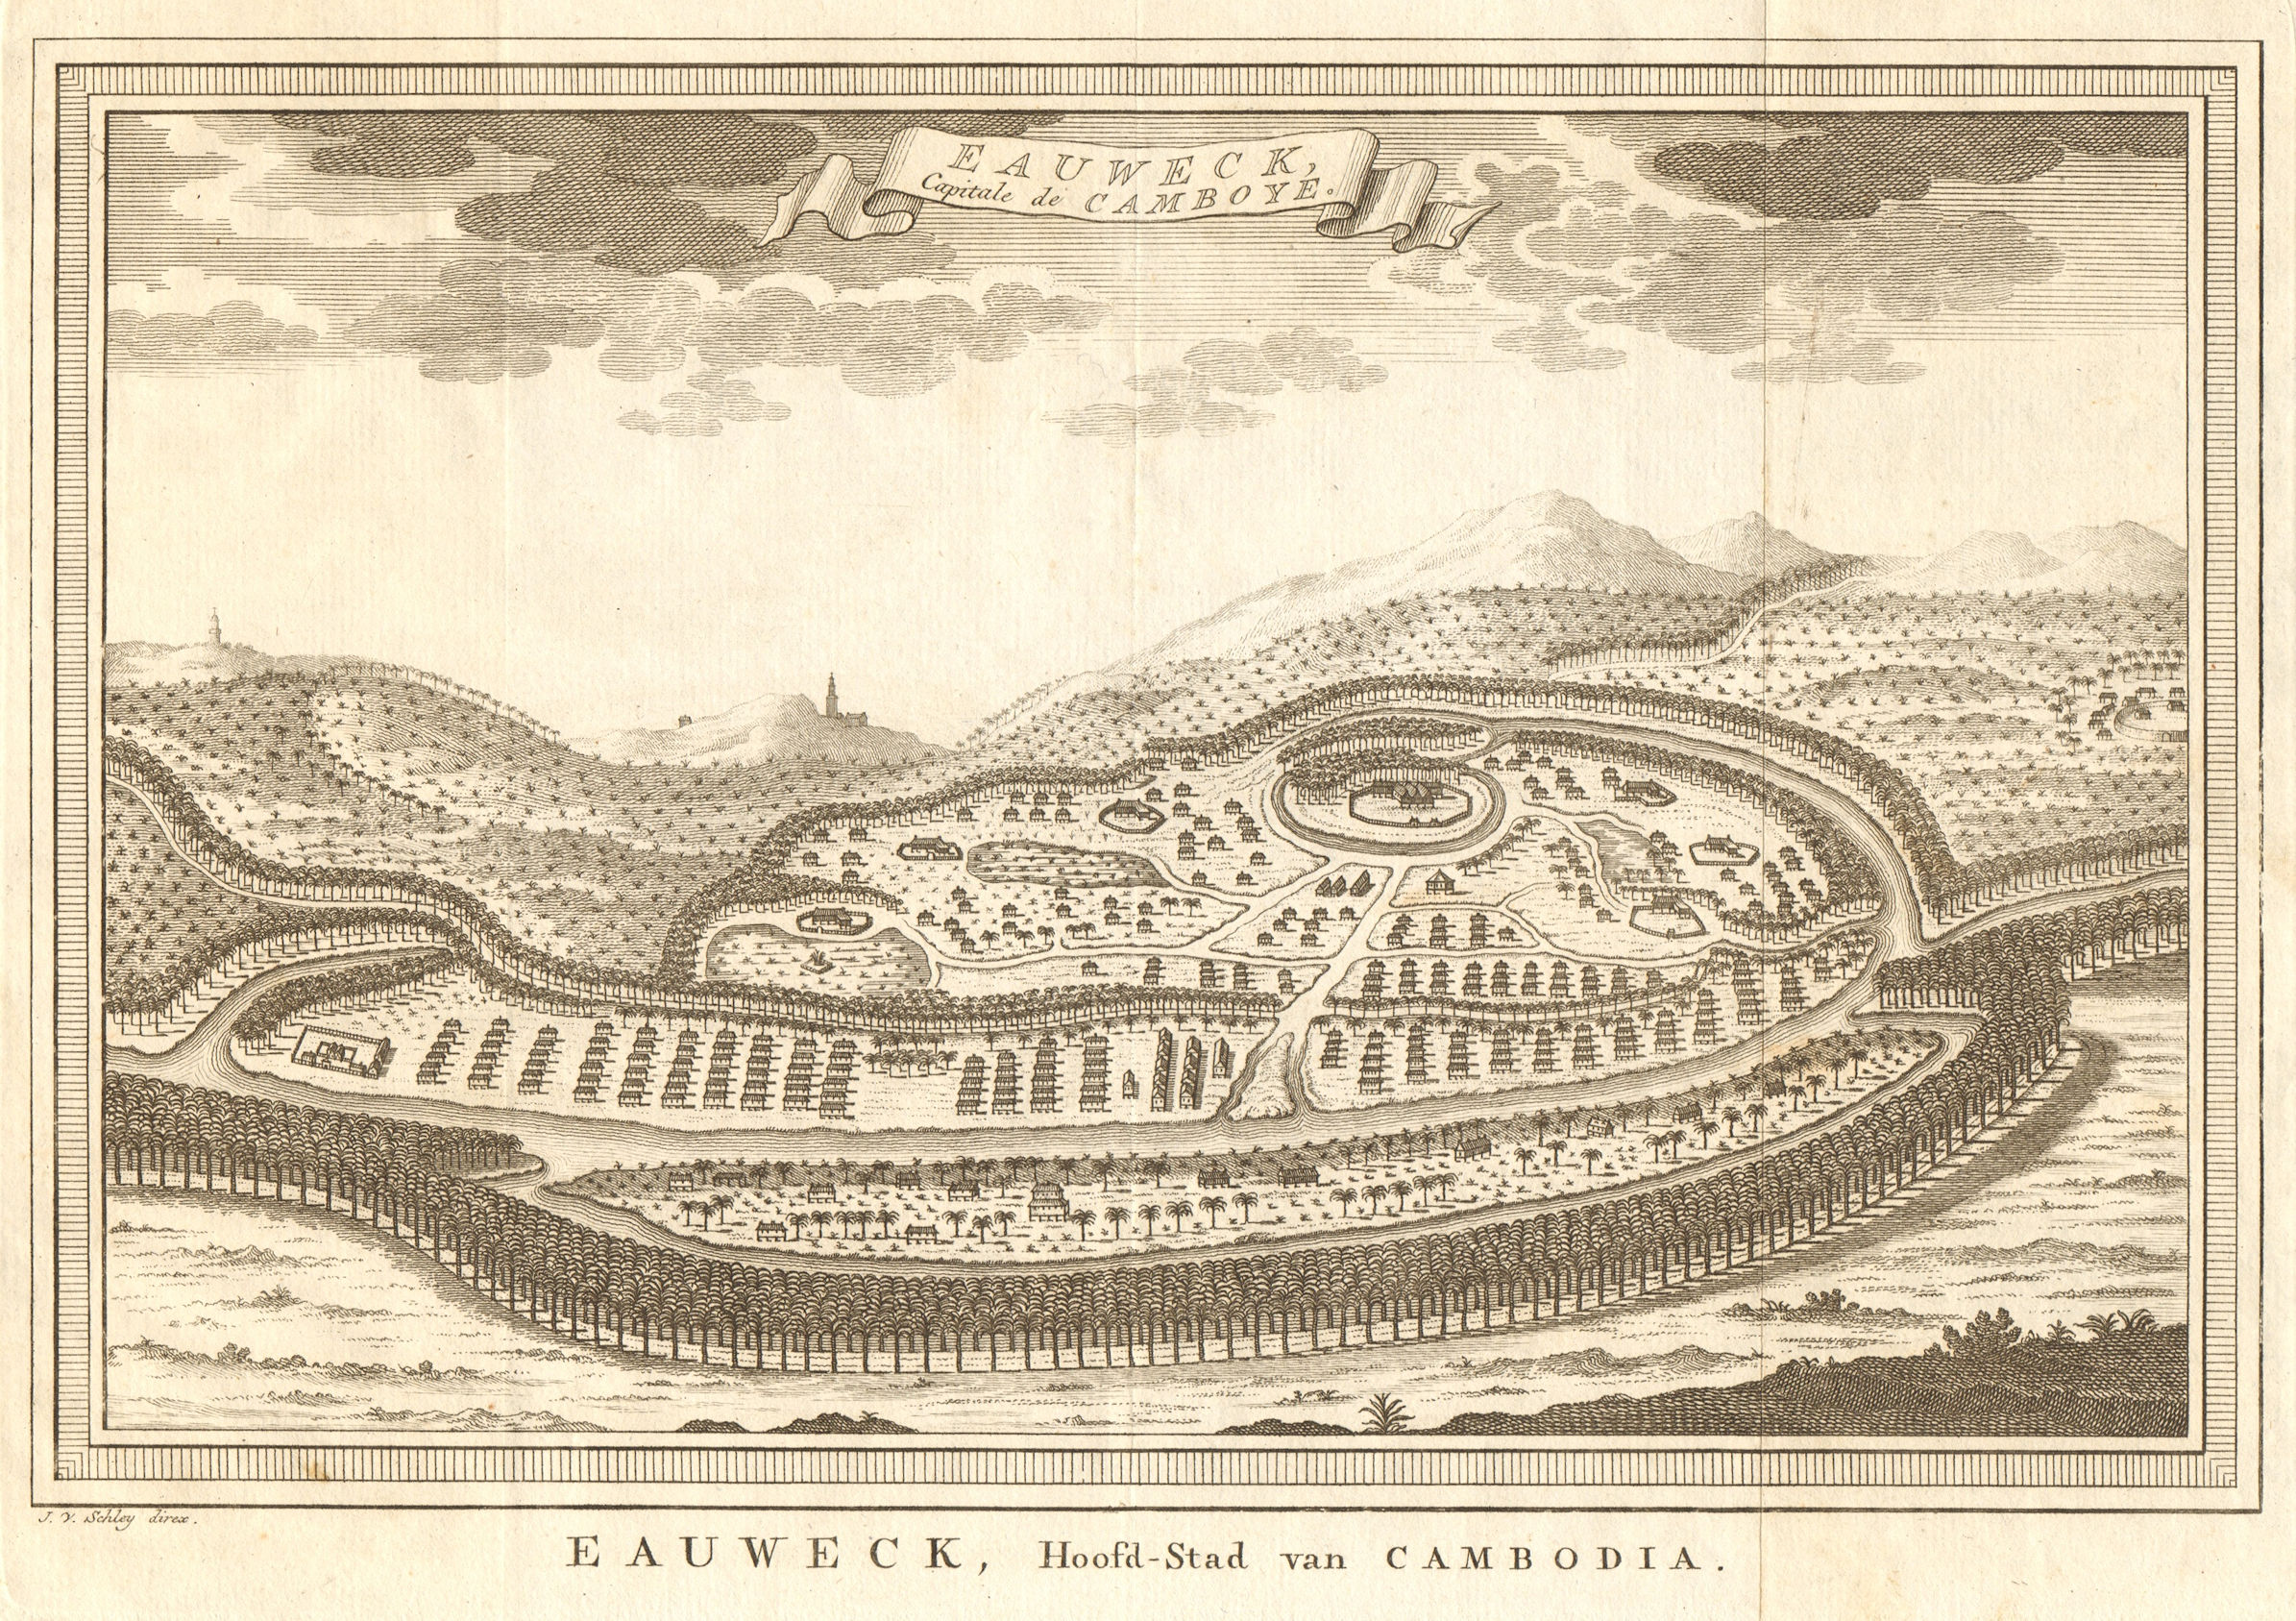 'Eauweck, Capitale de Camboye'. Longvek, Cambodia plan. BELLIN/SCHLEY 1755 map